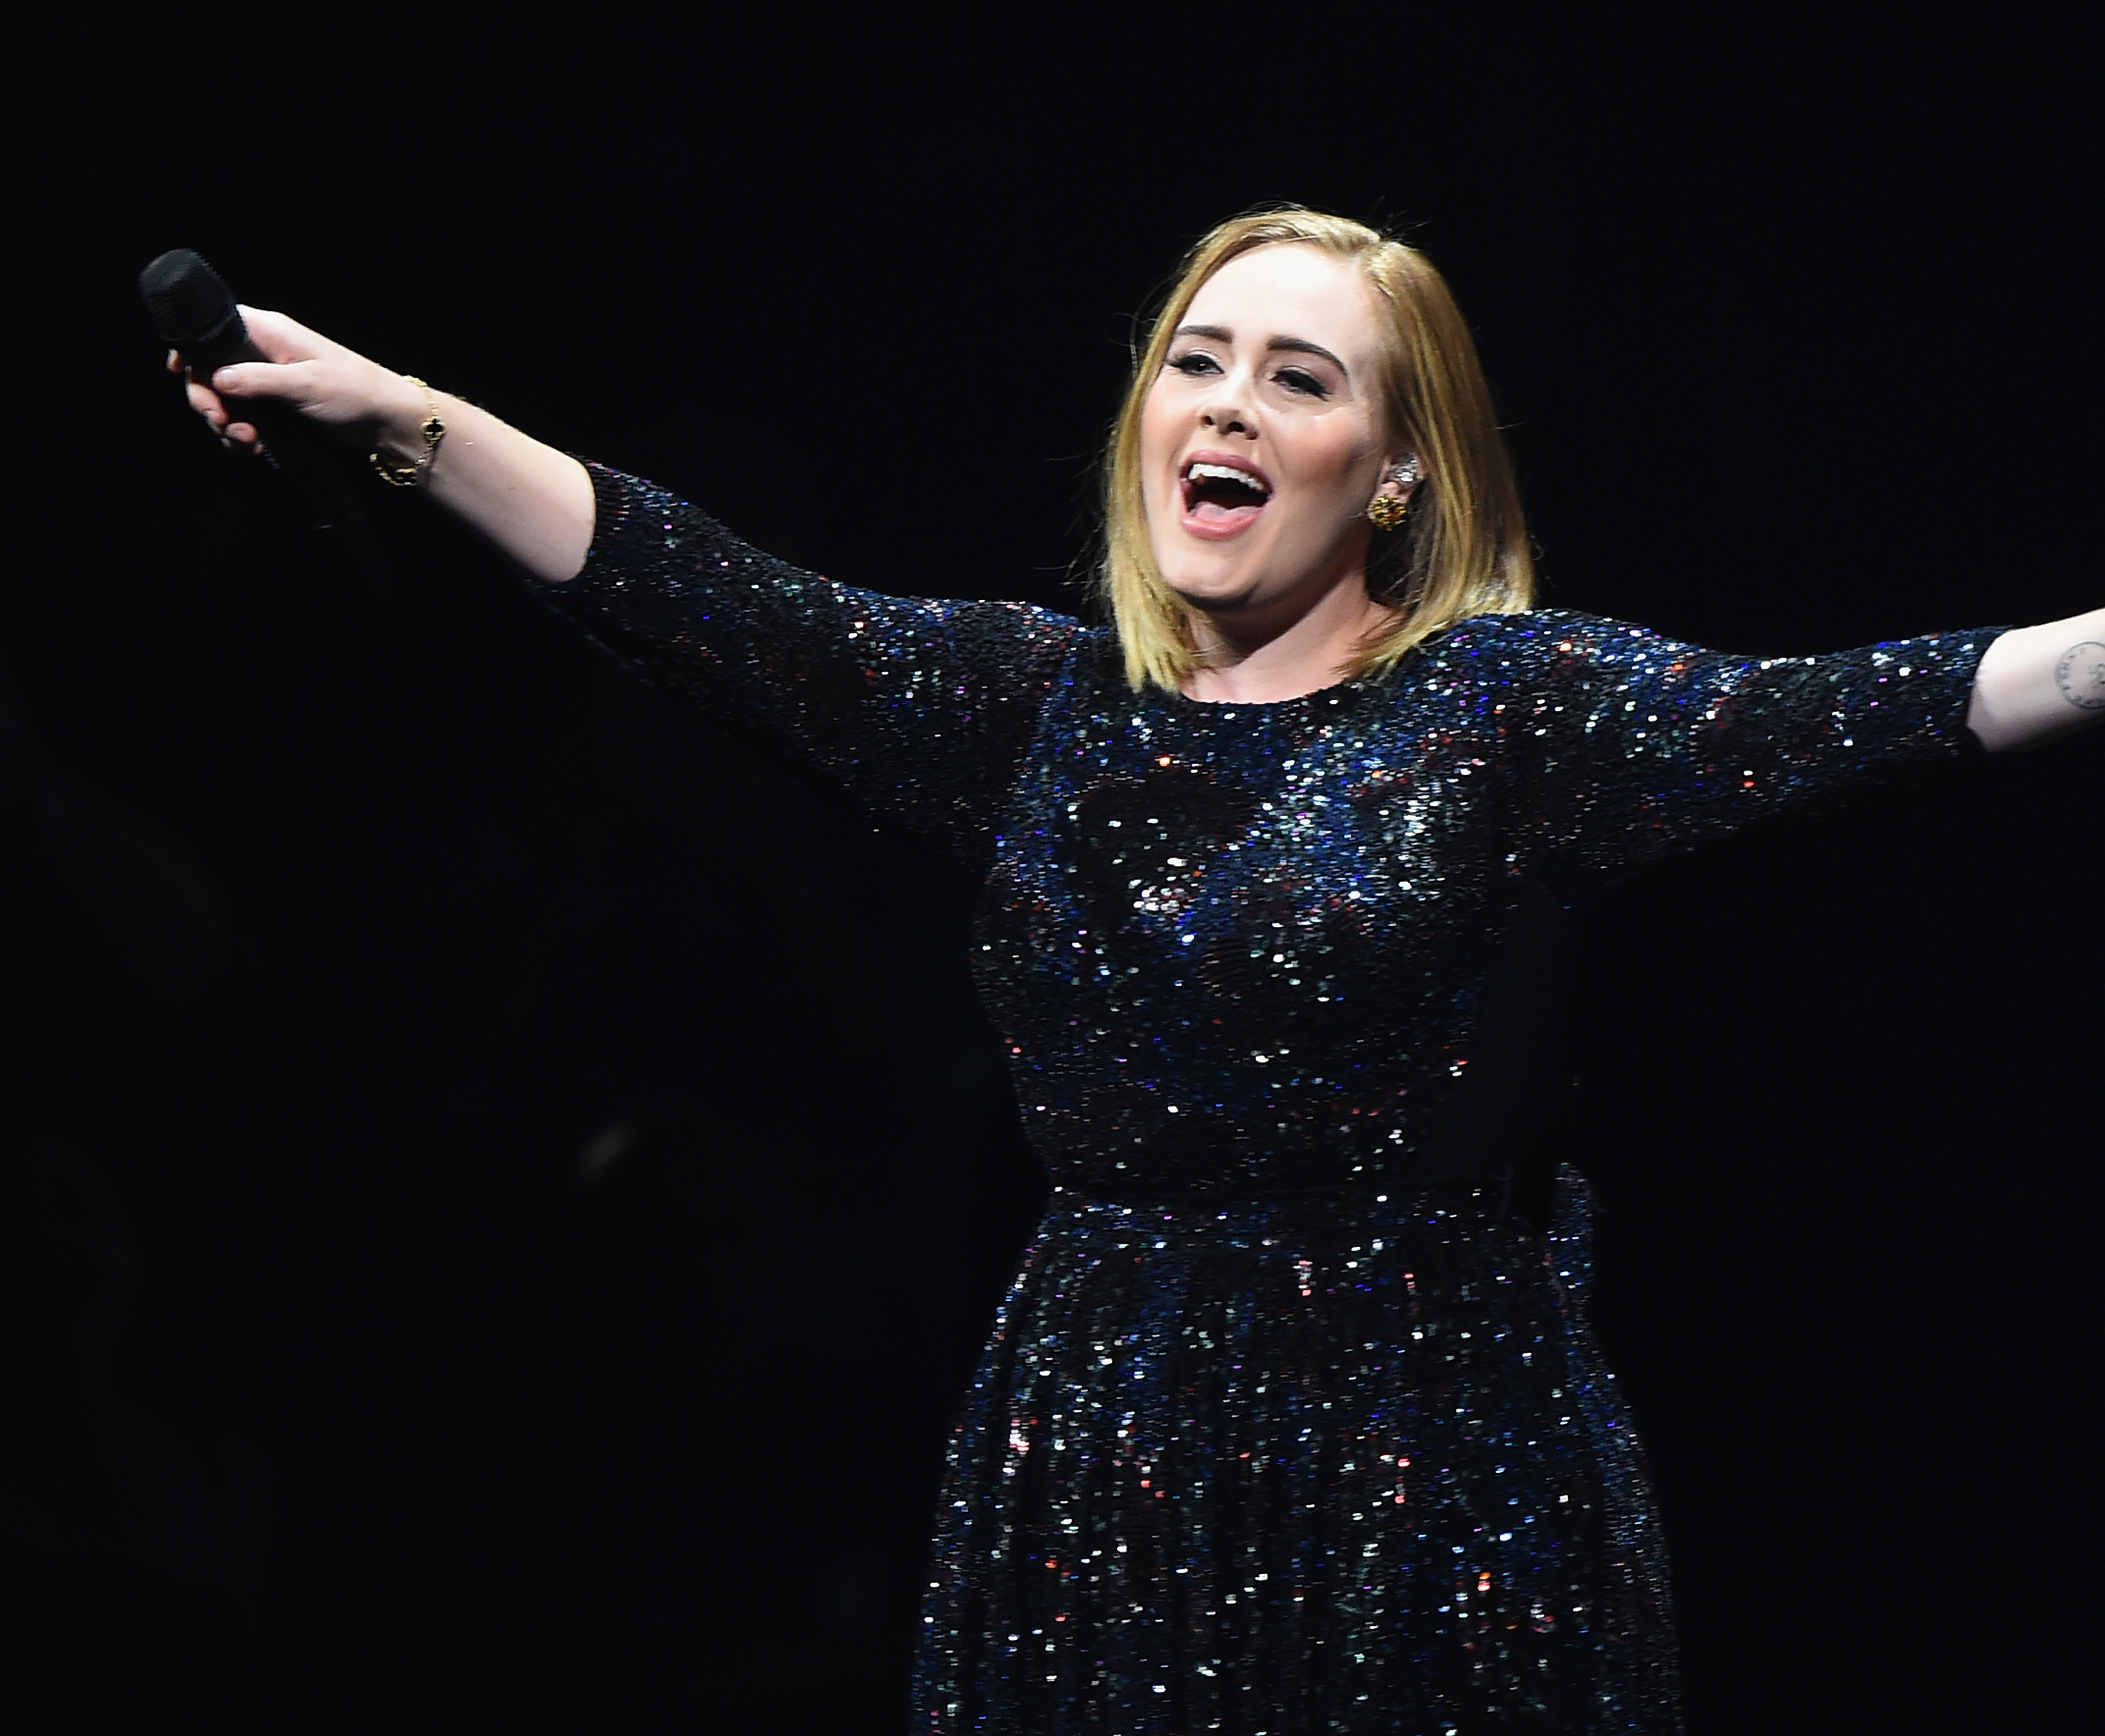 PHILADELPHIA, PA - SEPTEMBER 09: Adele performs at Wells Fargo Center on September 9, 2016 in Philadelphia, Pennsylvania. (Photo by Theo Wargo/Getty Images)